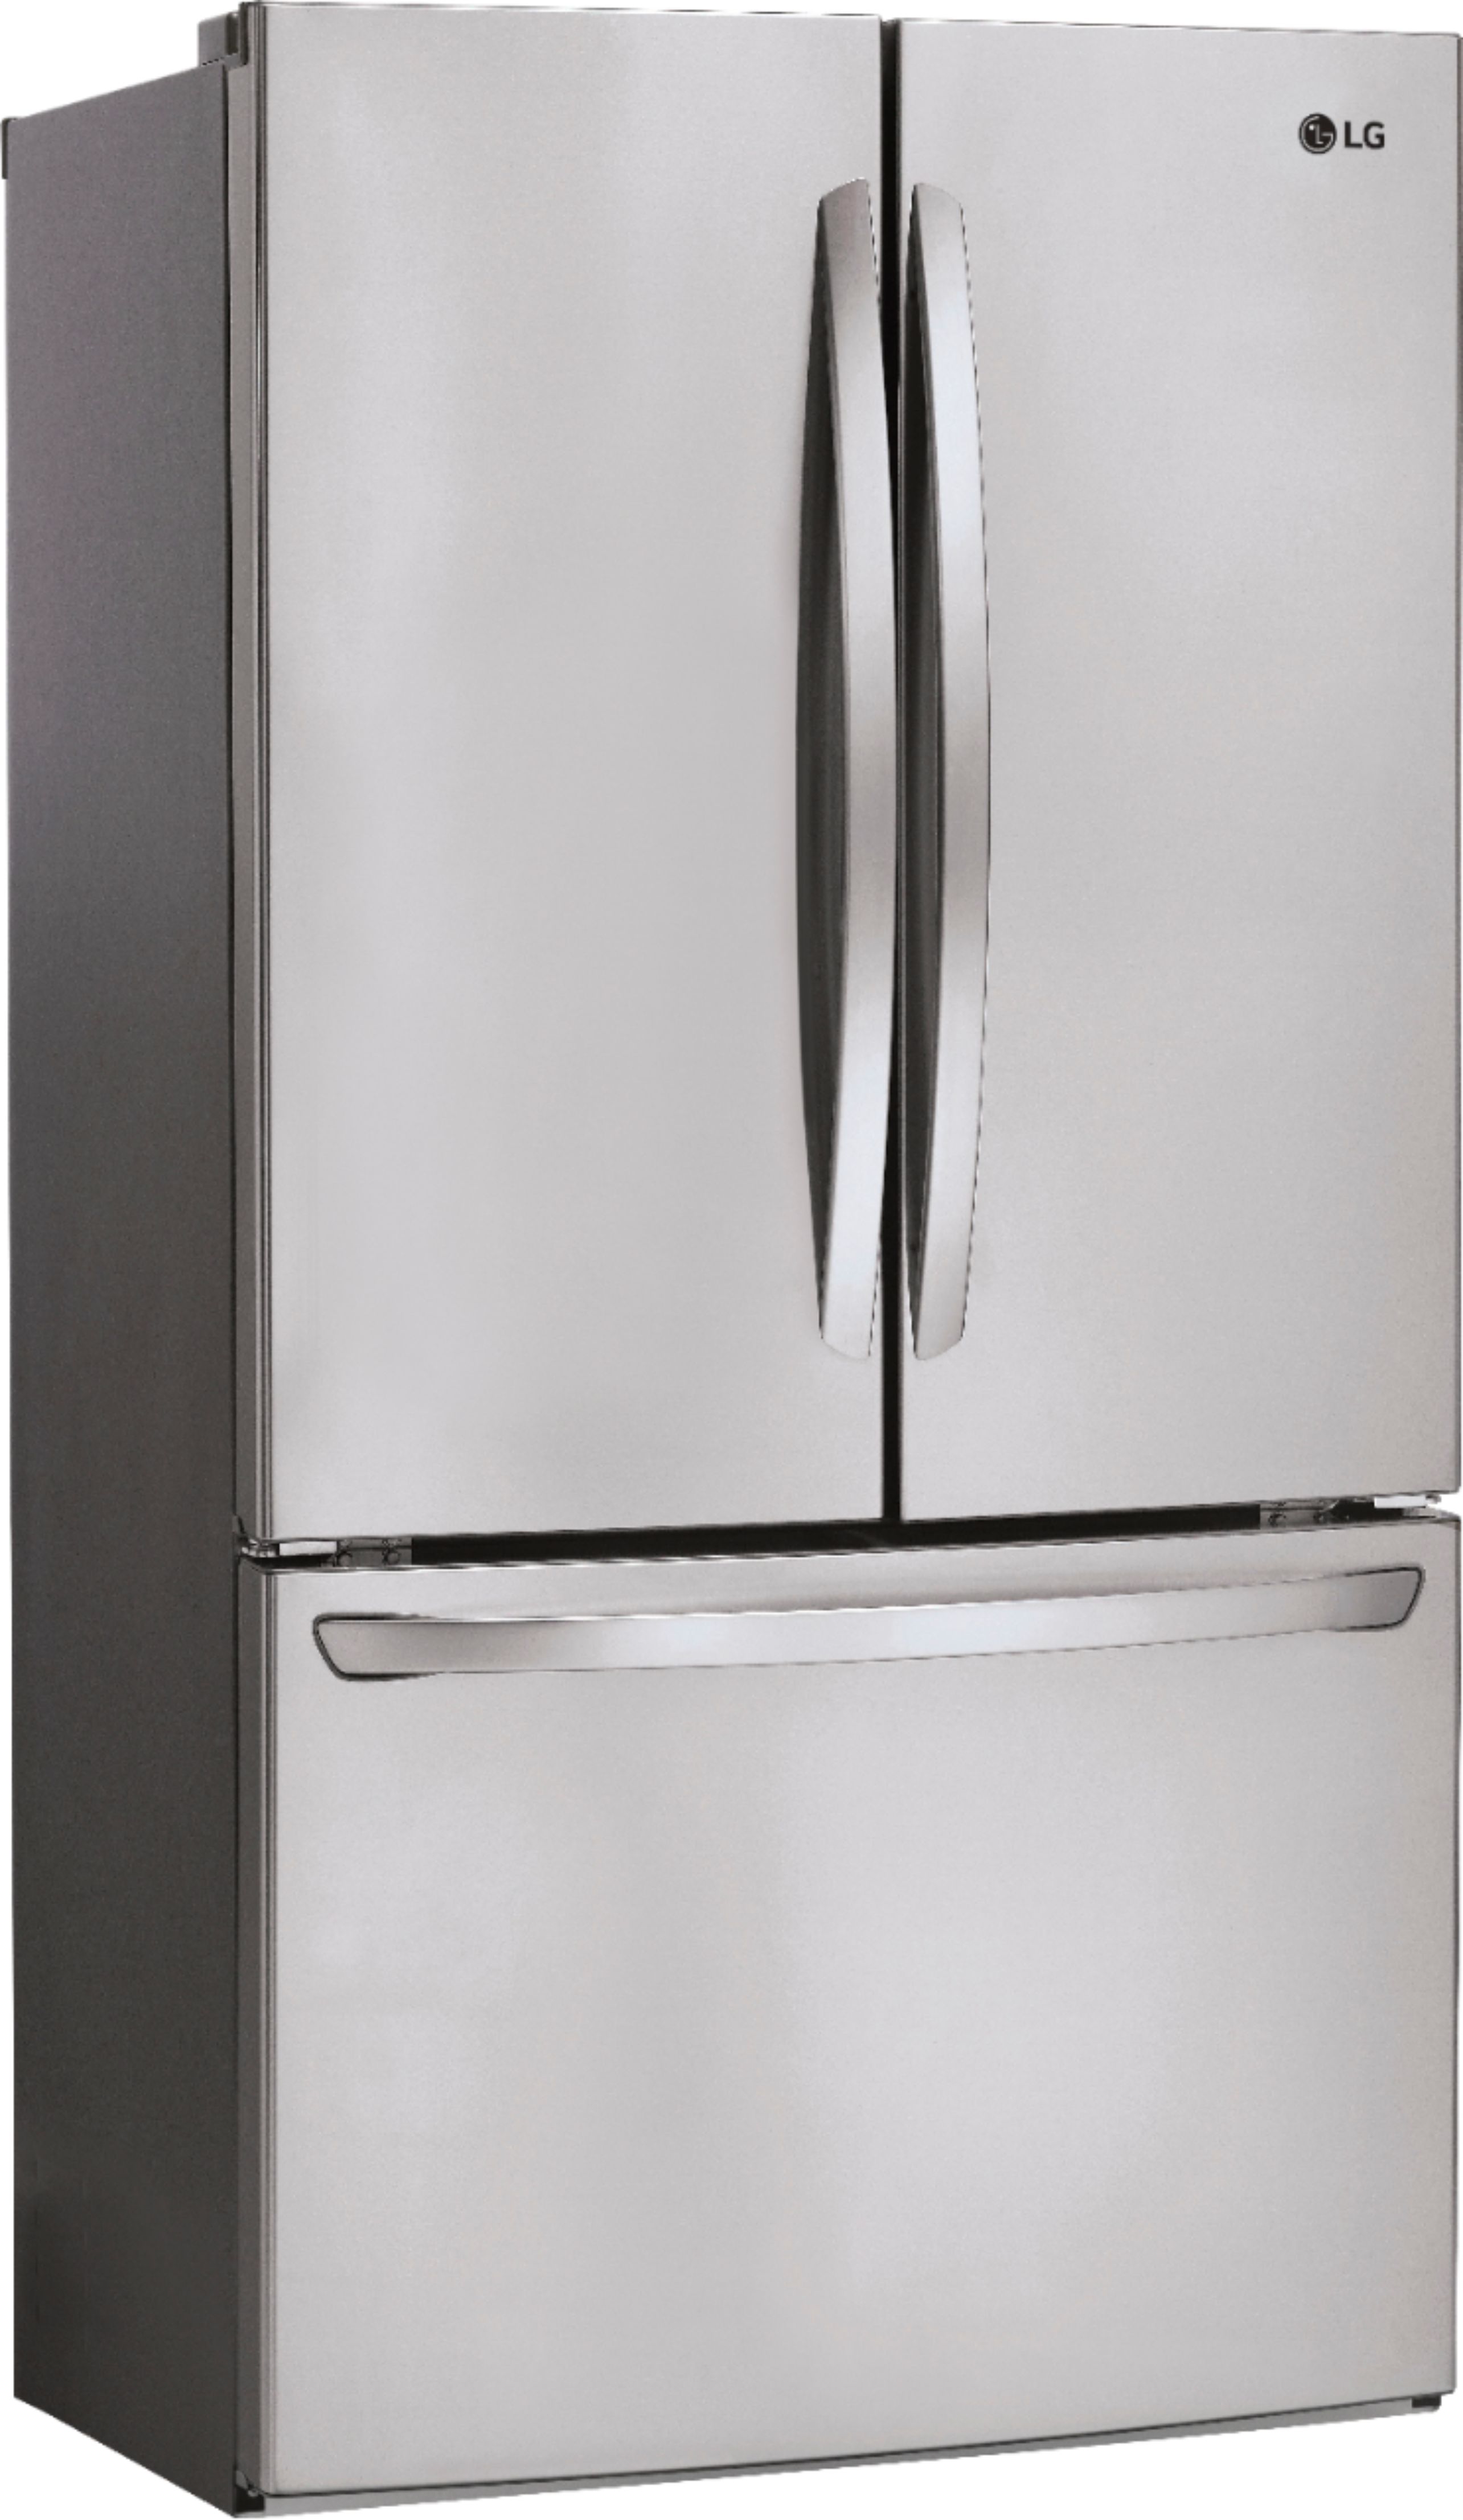 Best Buy LG Cu Ft French Door Refrigerator Stainless Steel LFCS S